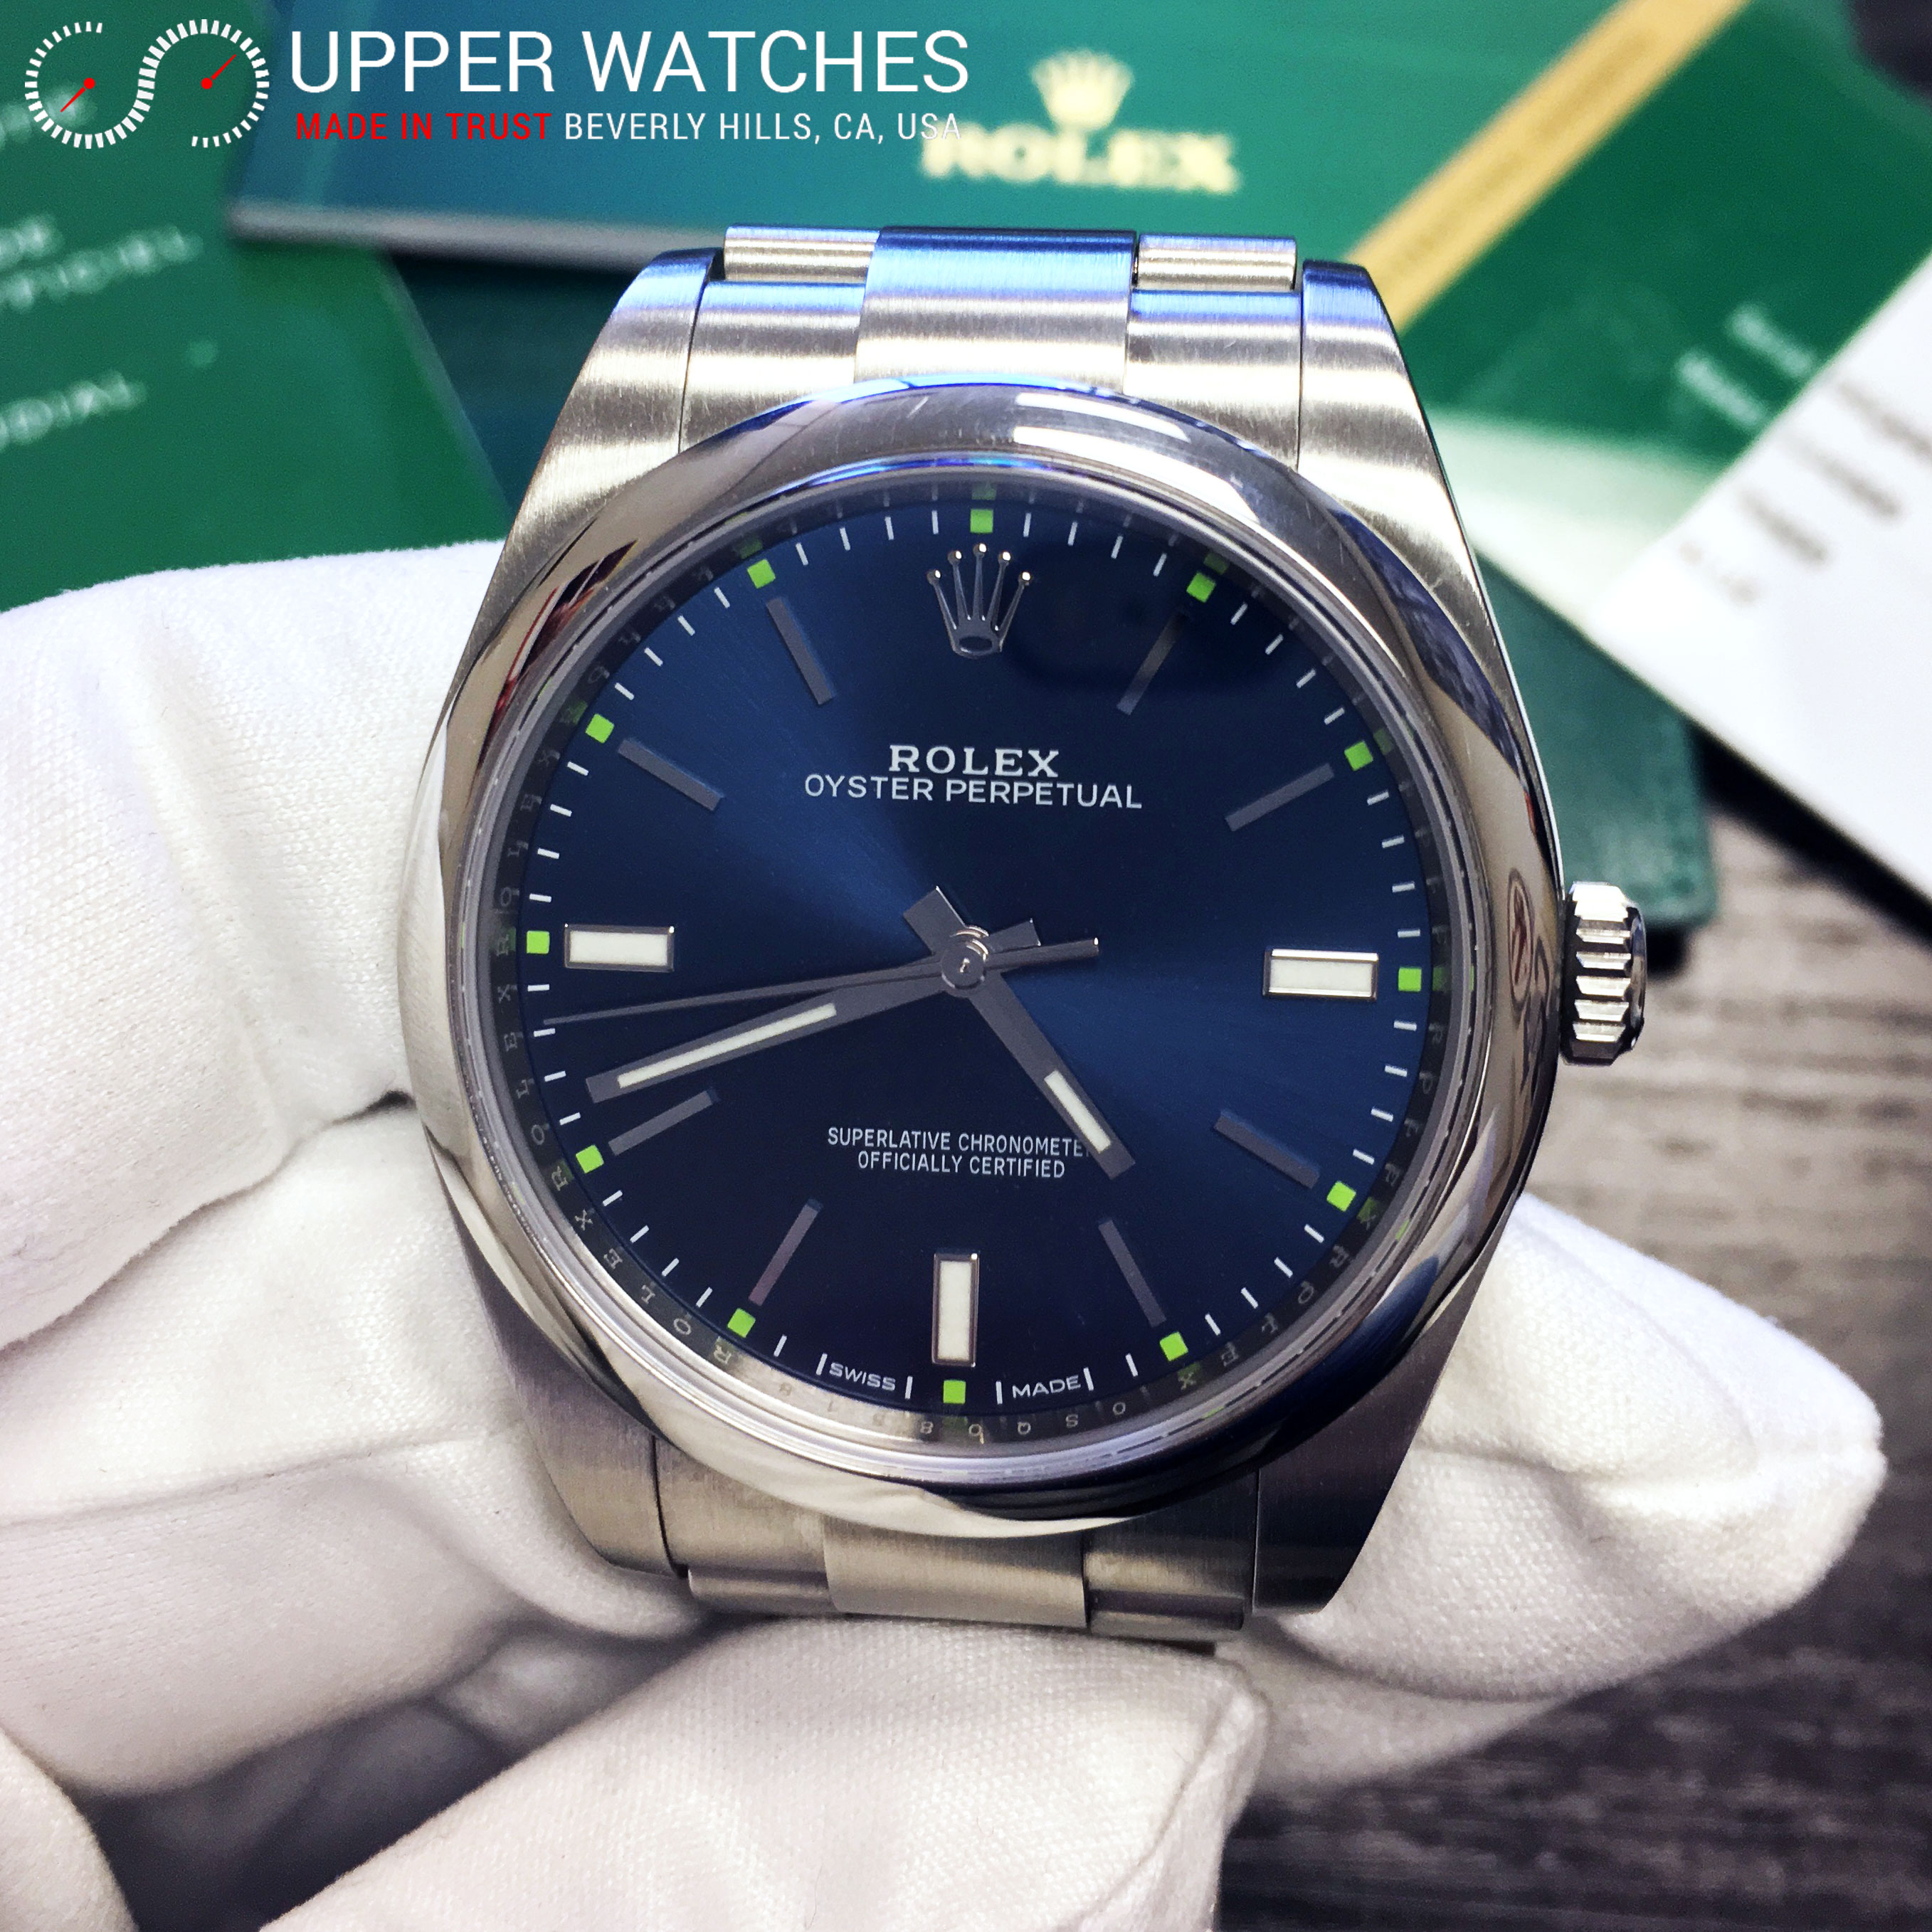 Rolex 114300 Blue Dial - Upper Watches